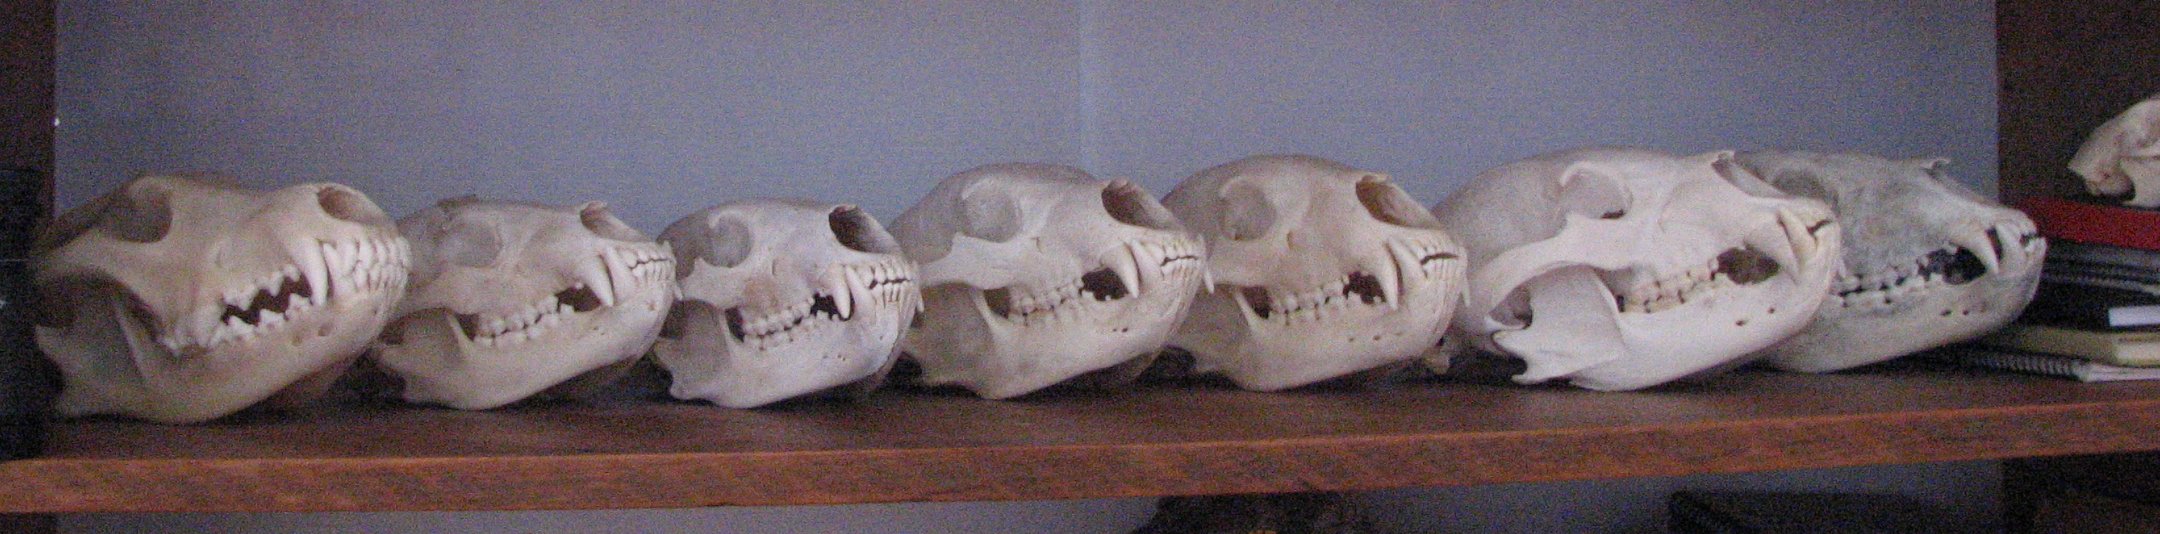 Bear Skull Collection